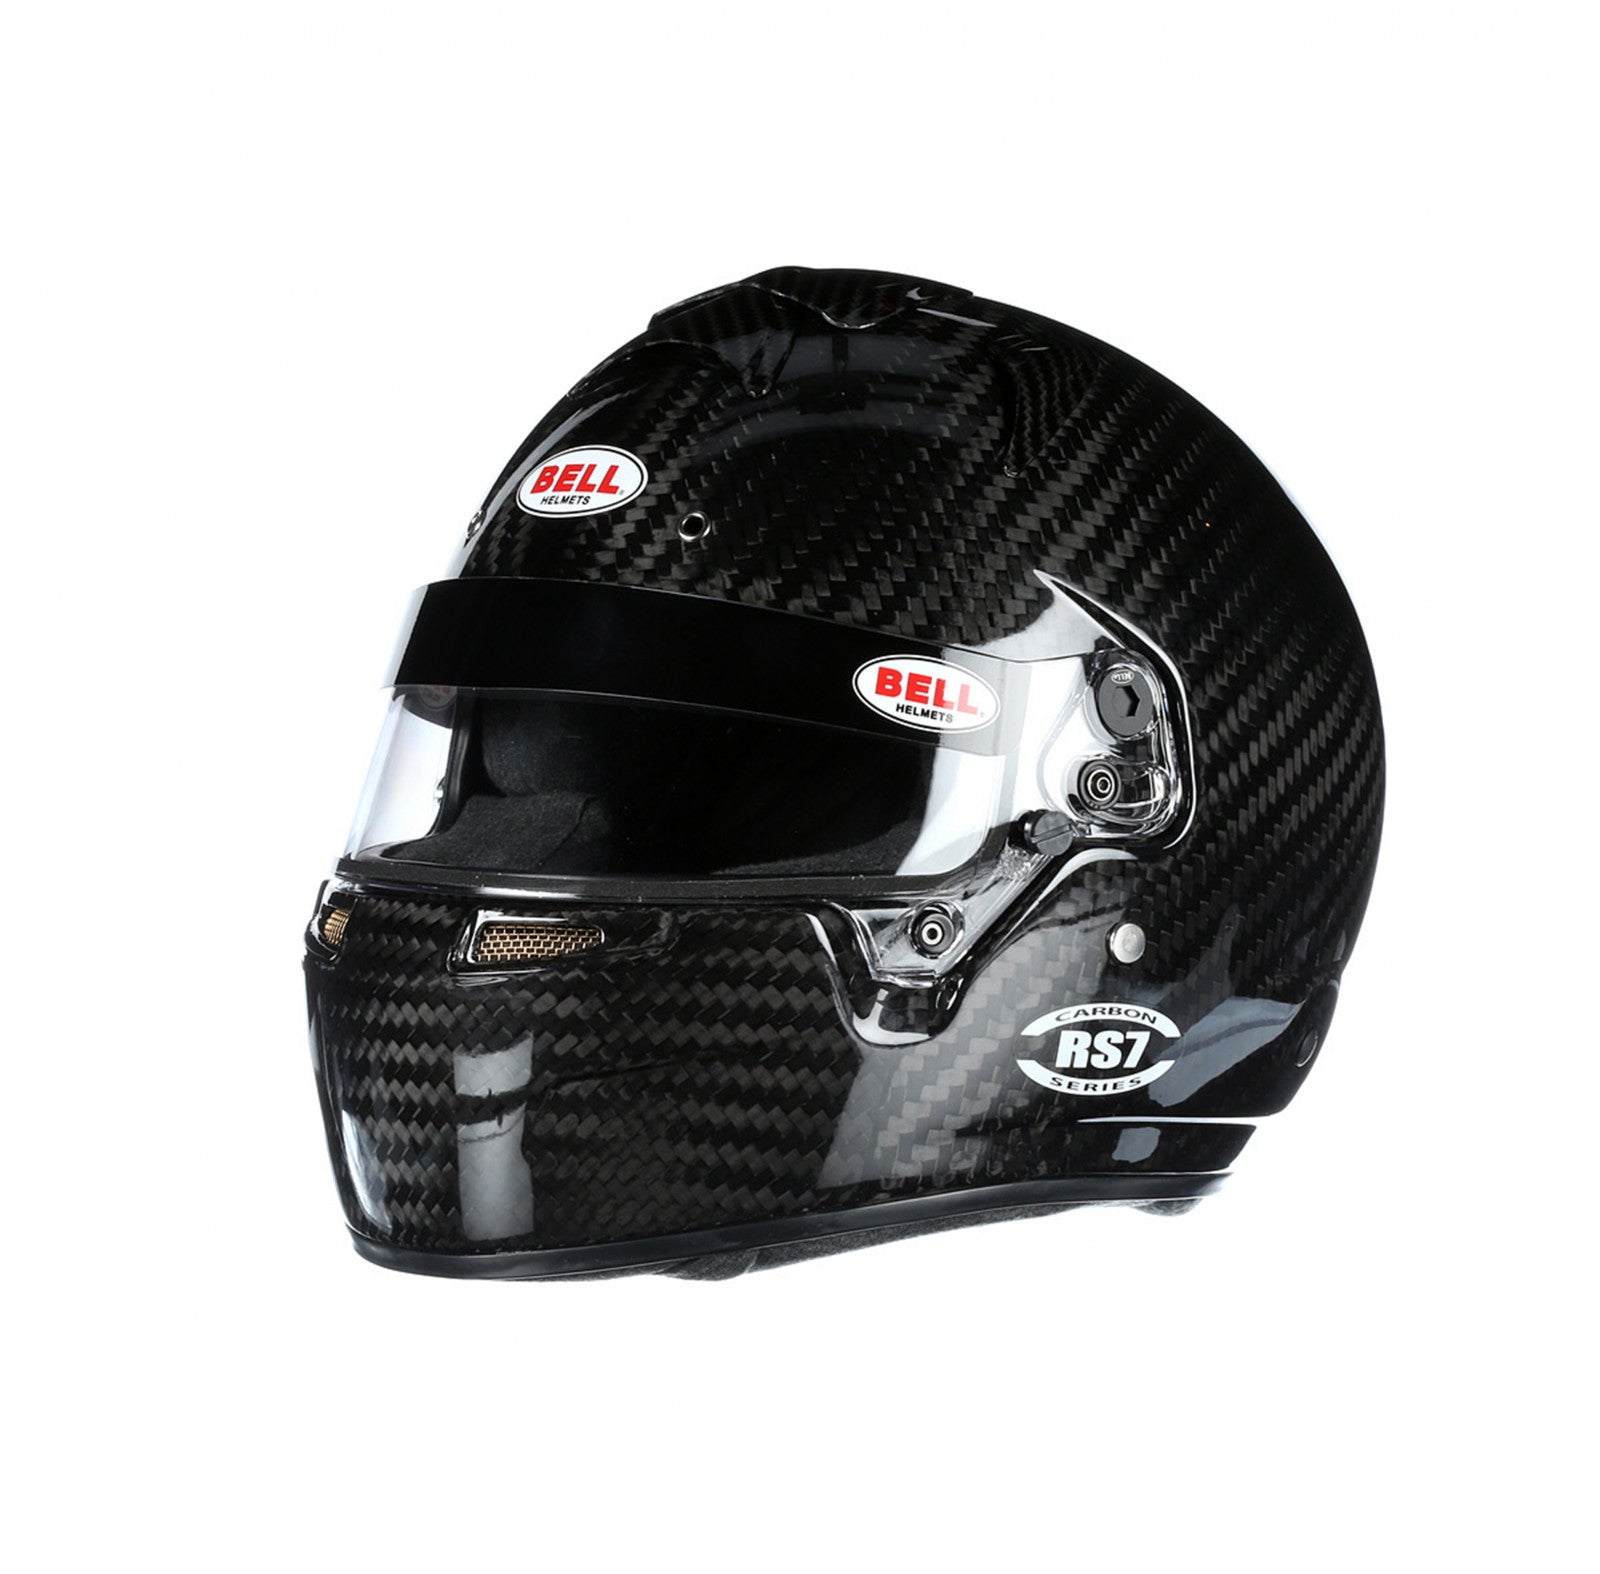 Bell RS7 Carbon Helmet Size 58 cm